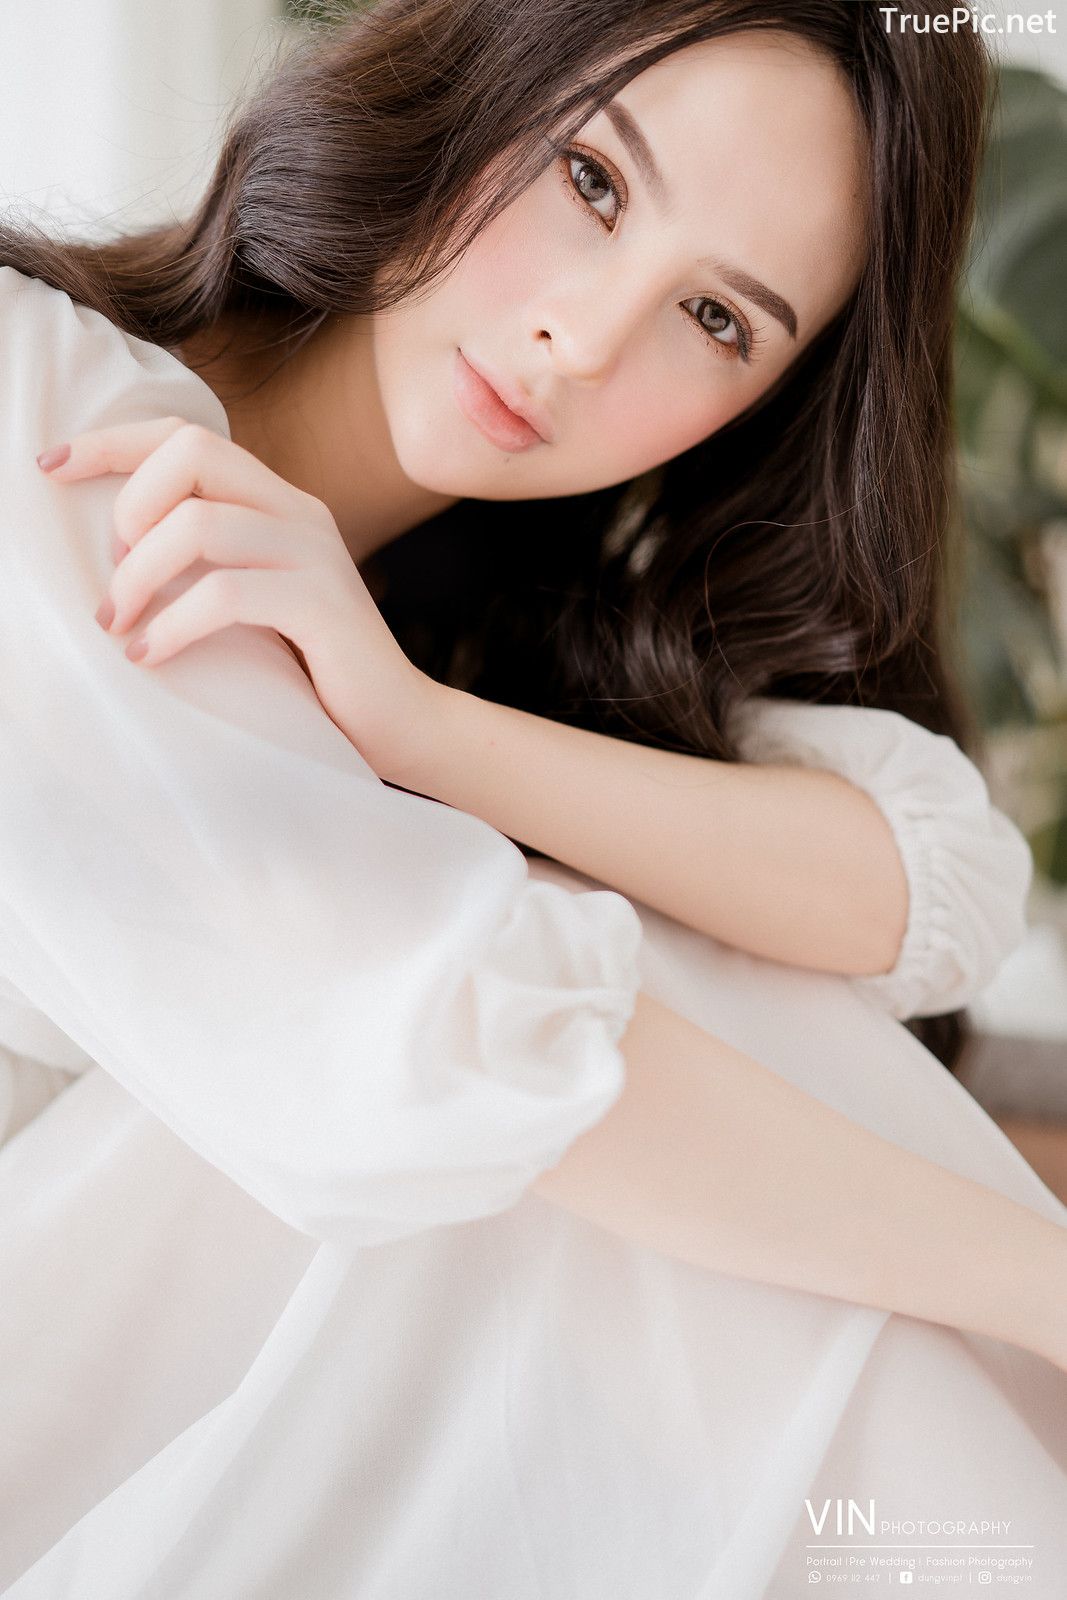 Image-Vietnamese-Hot-Model-Sexy-Beauty-of-Beautiful-Girls-Taken-by-VIN-Photo-1-TruePic.net- Picture-39